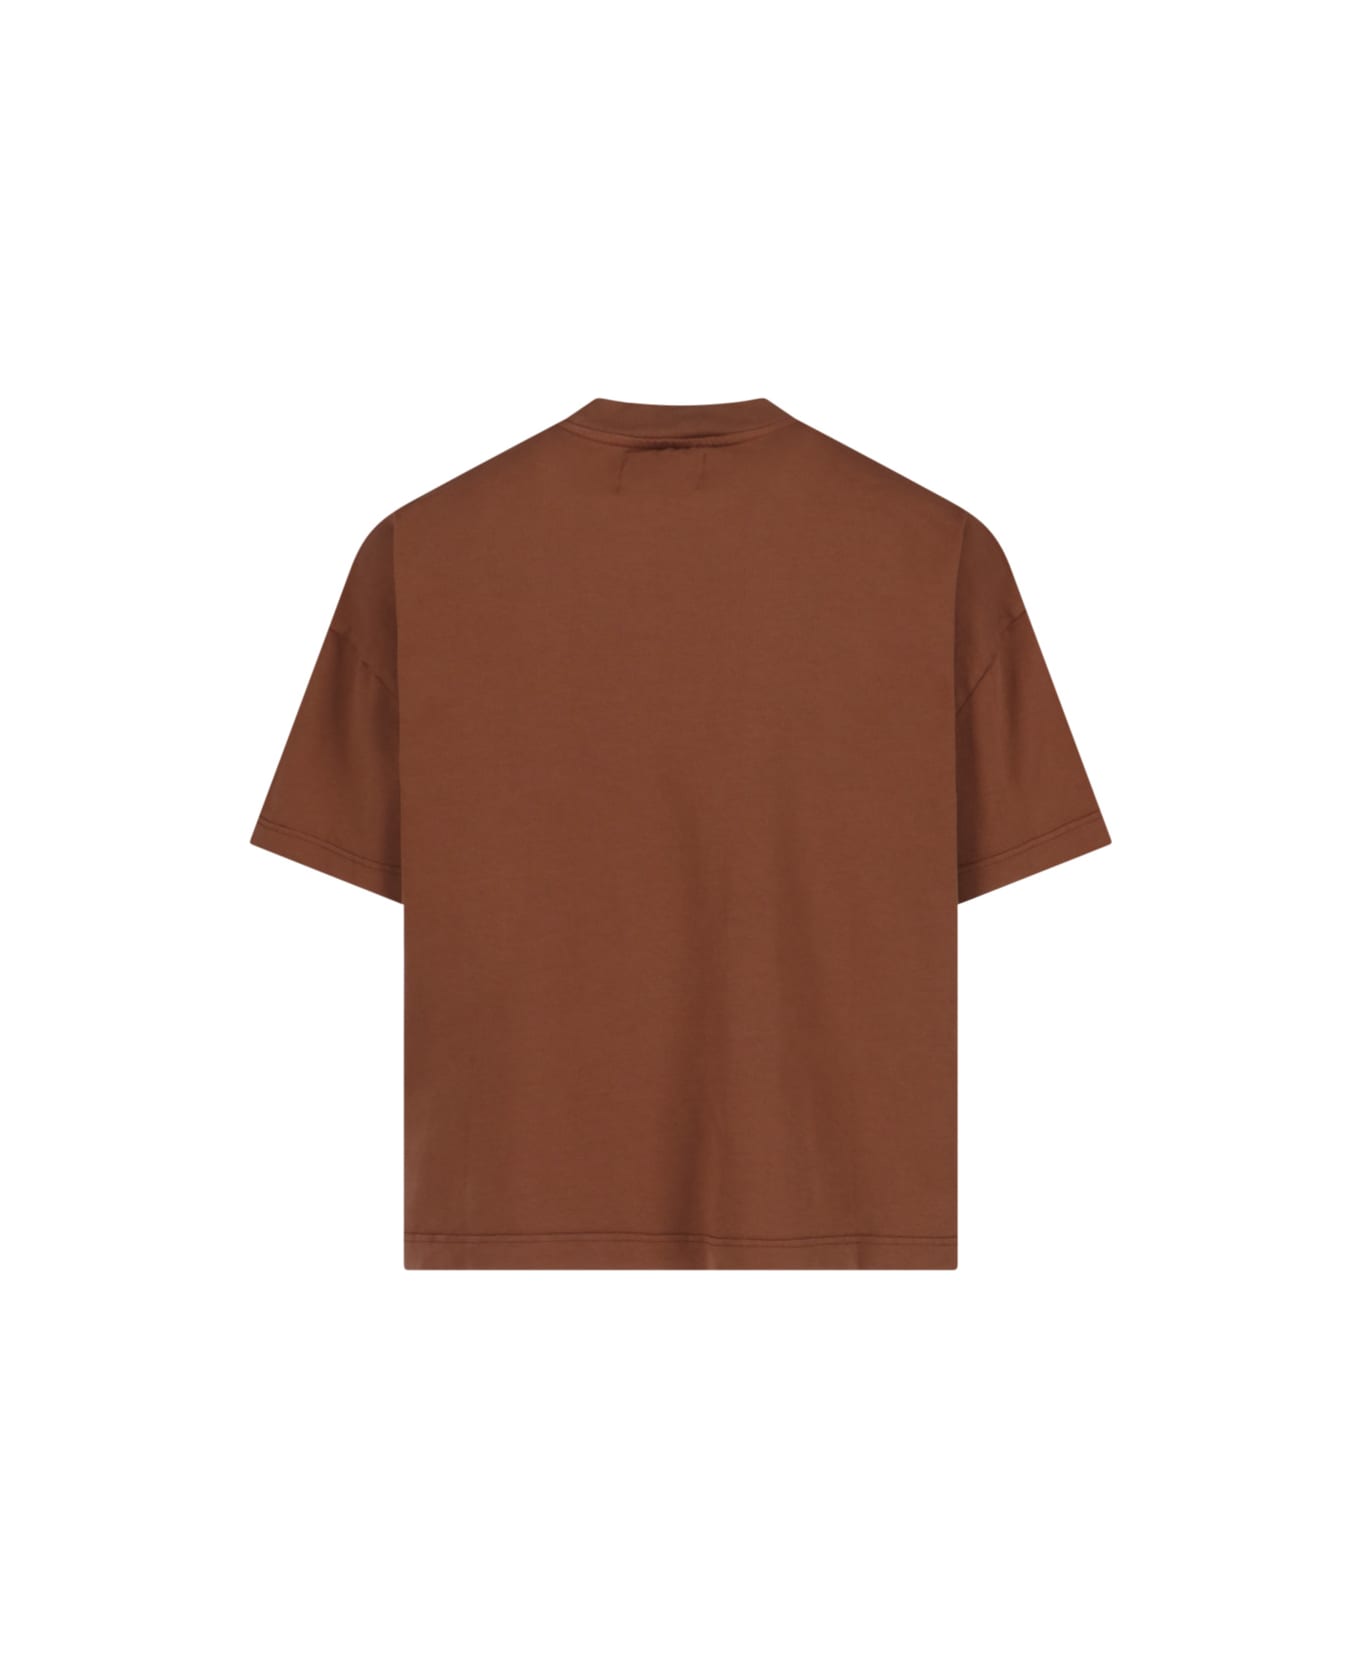 Bonsai Logo T-shirt - Brown